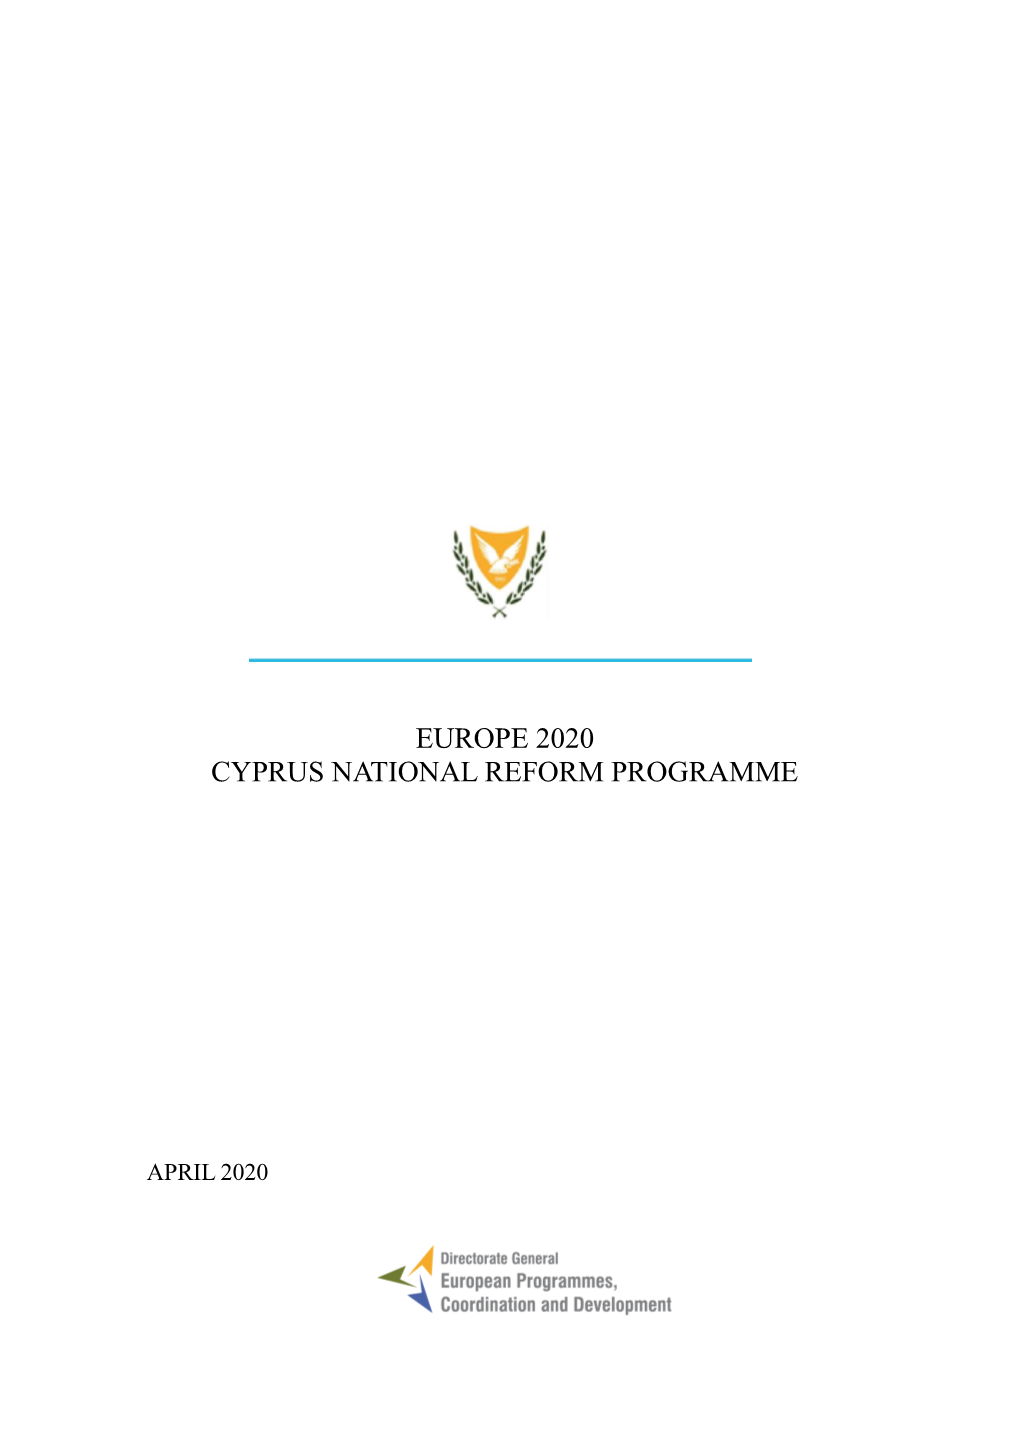 Cyprus National Reform Programme 2020